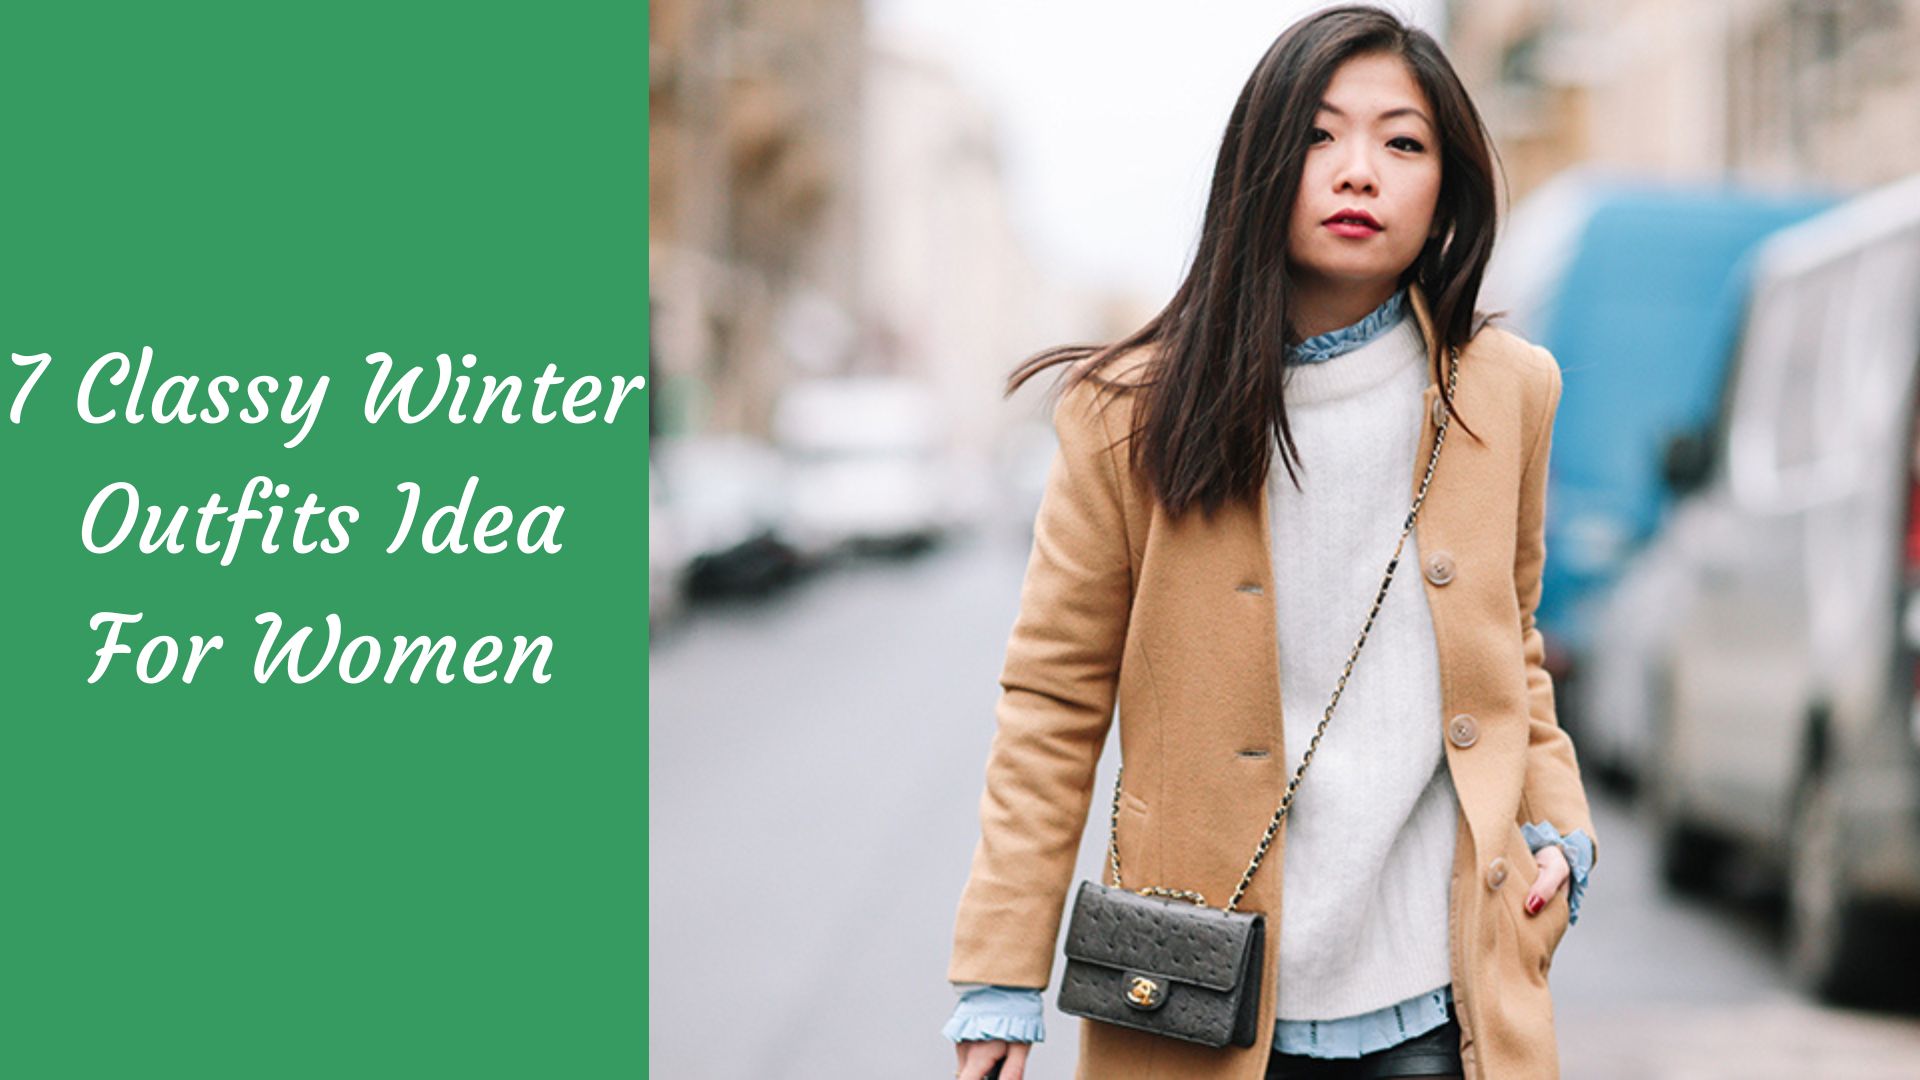 7 Classy Winter Outfits Idea for Women - The Kosha Journal